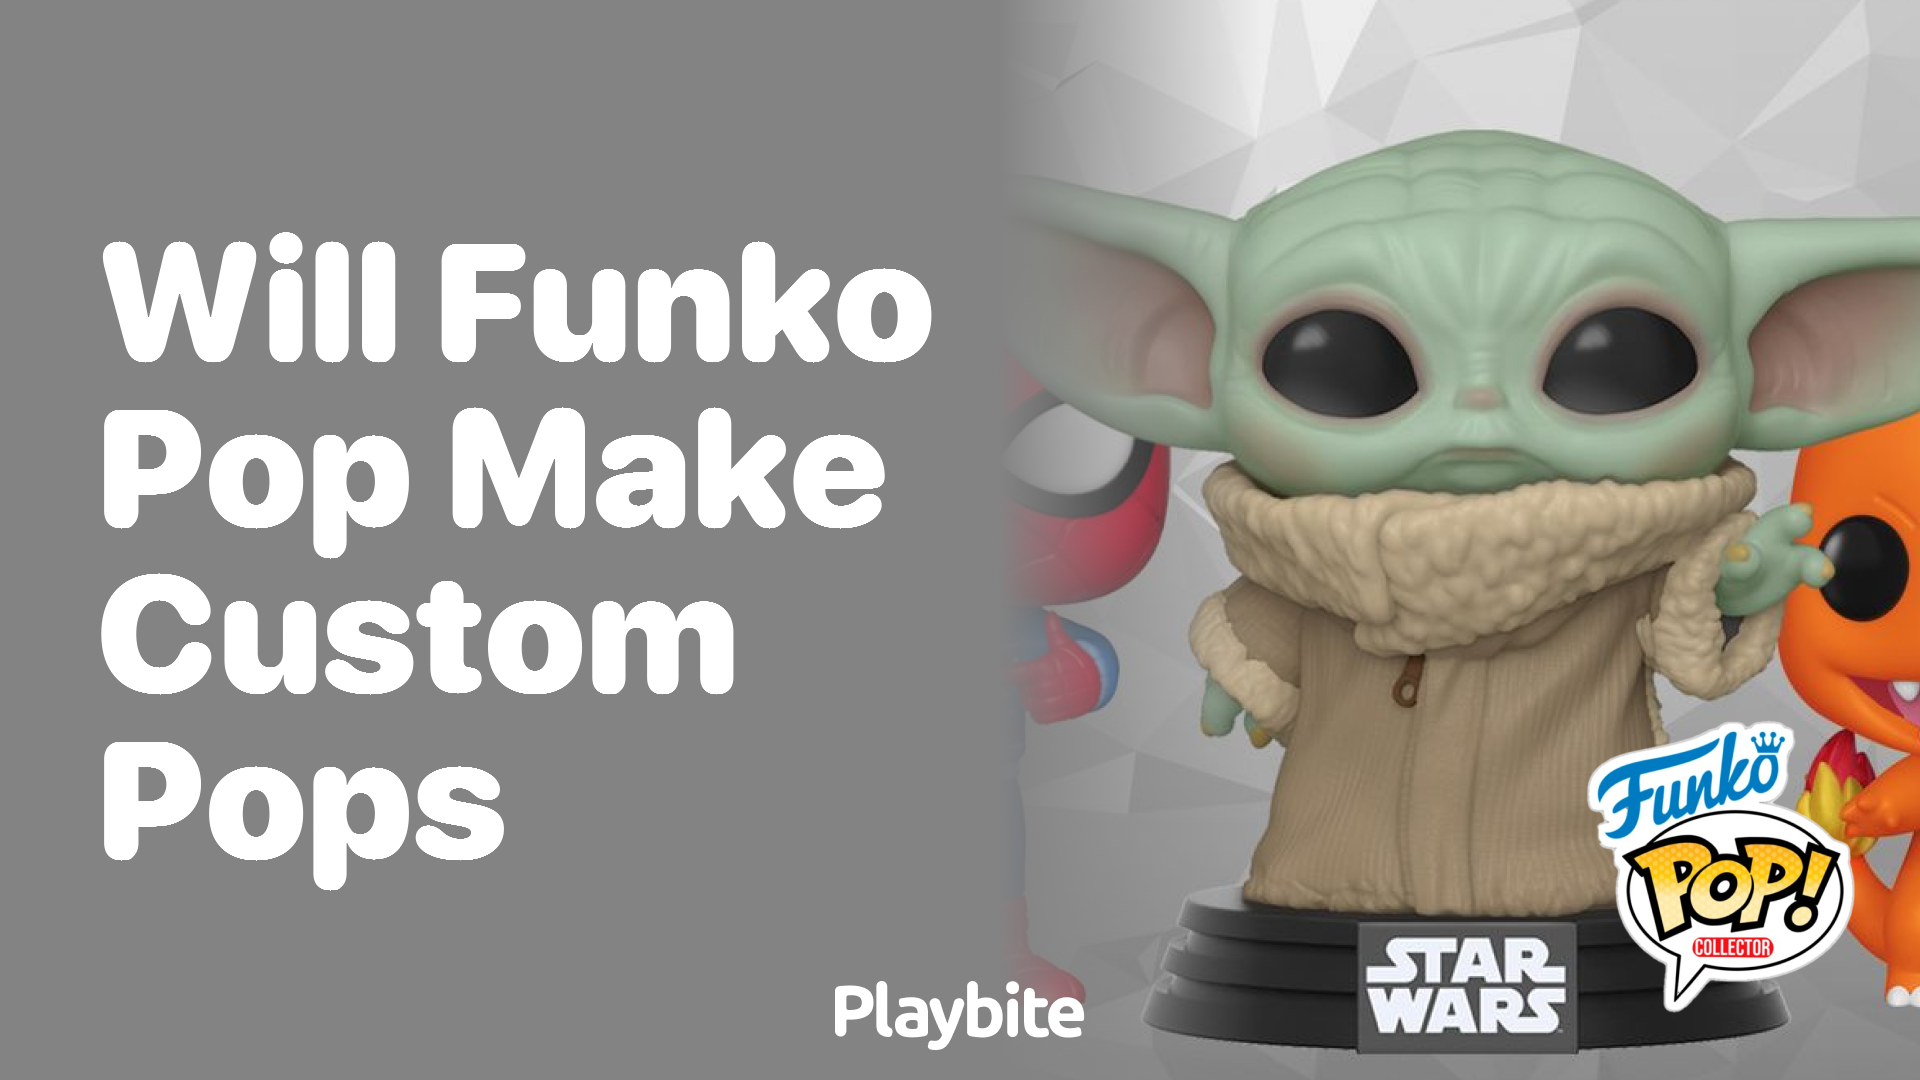 Will Funko Pop make custom Pops?